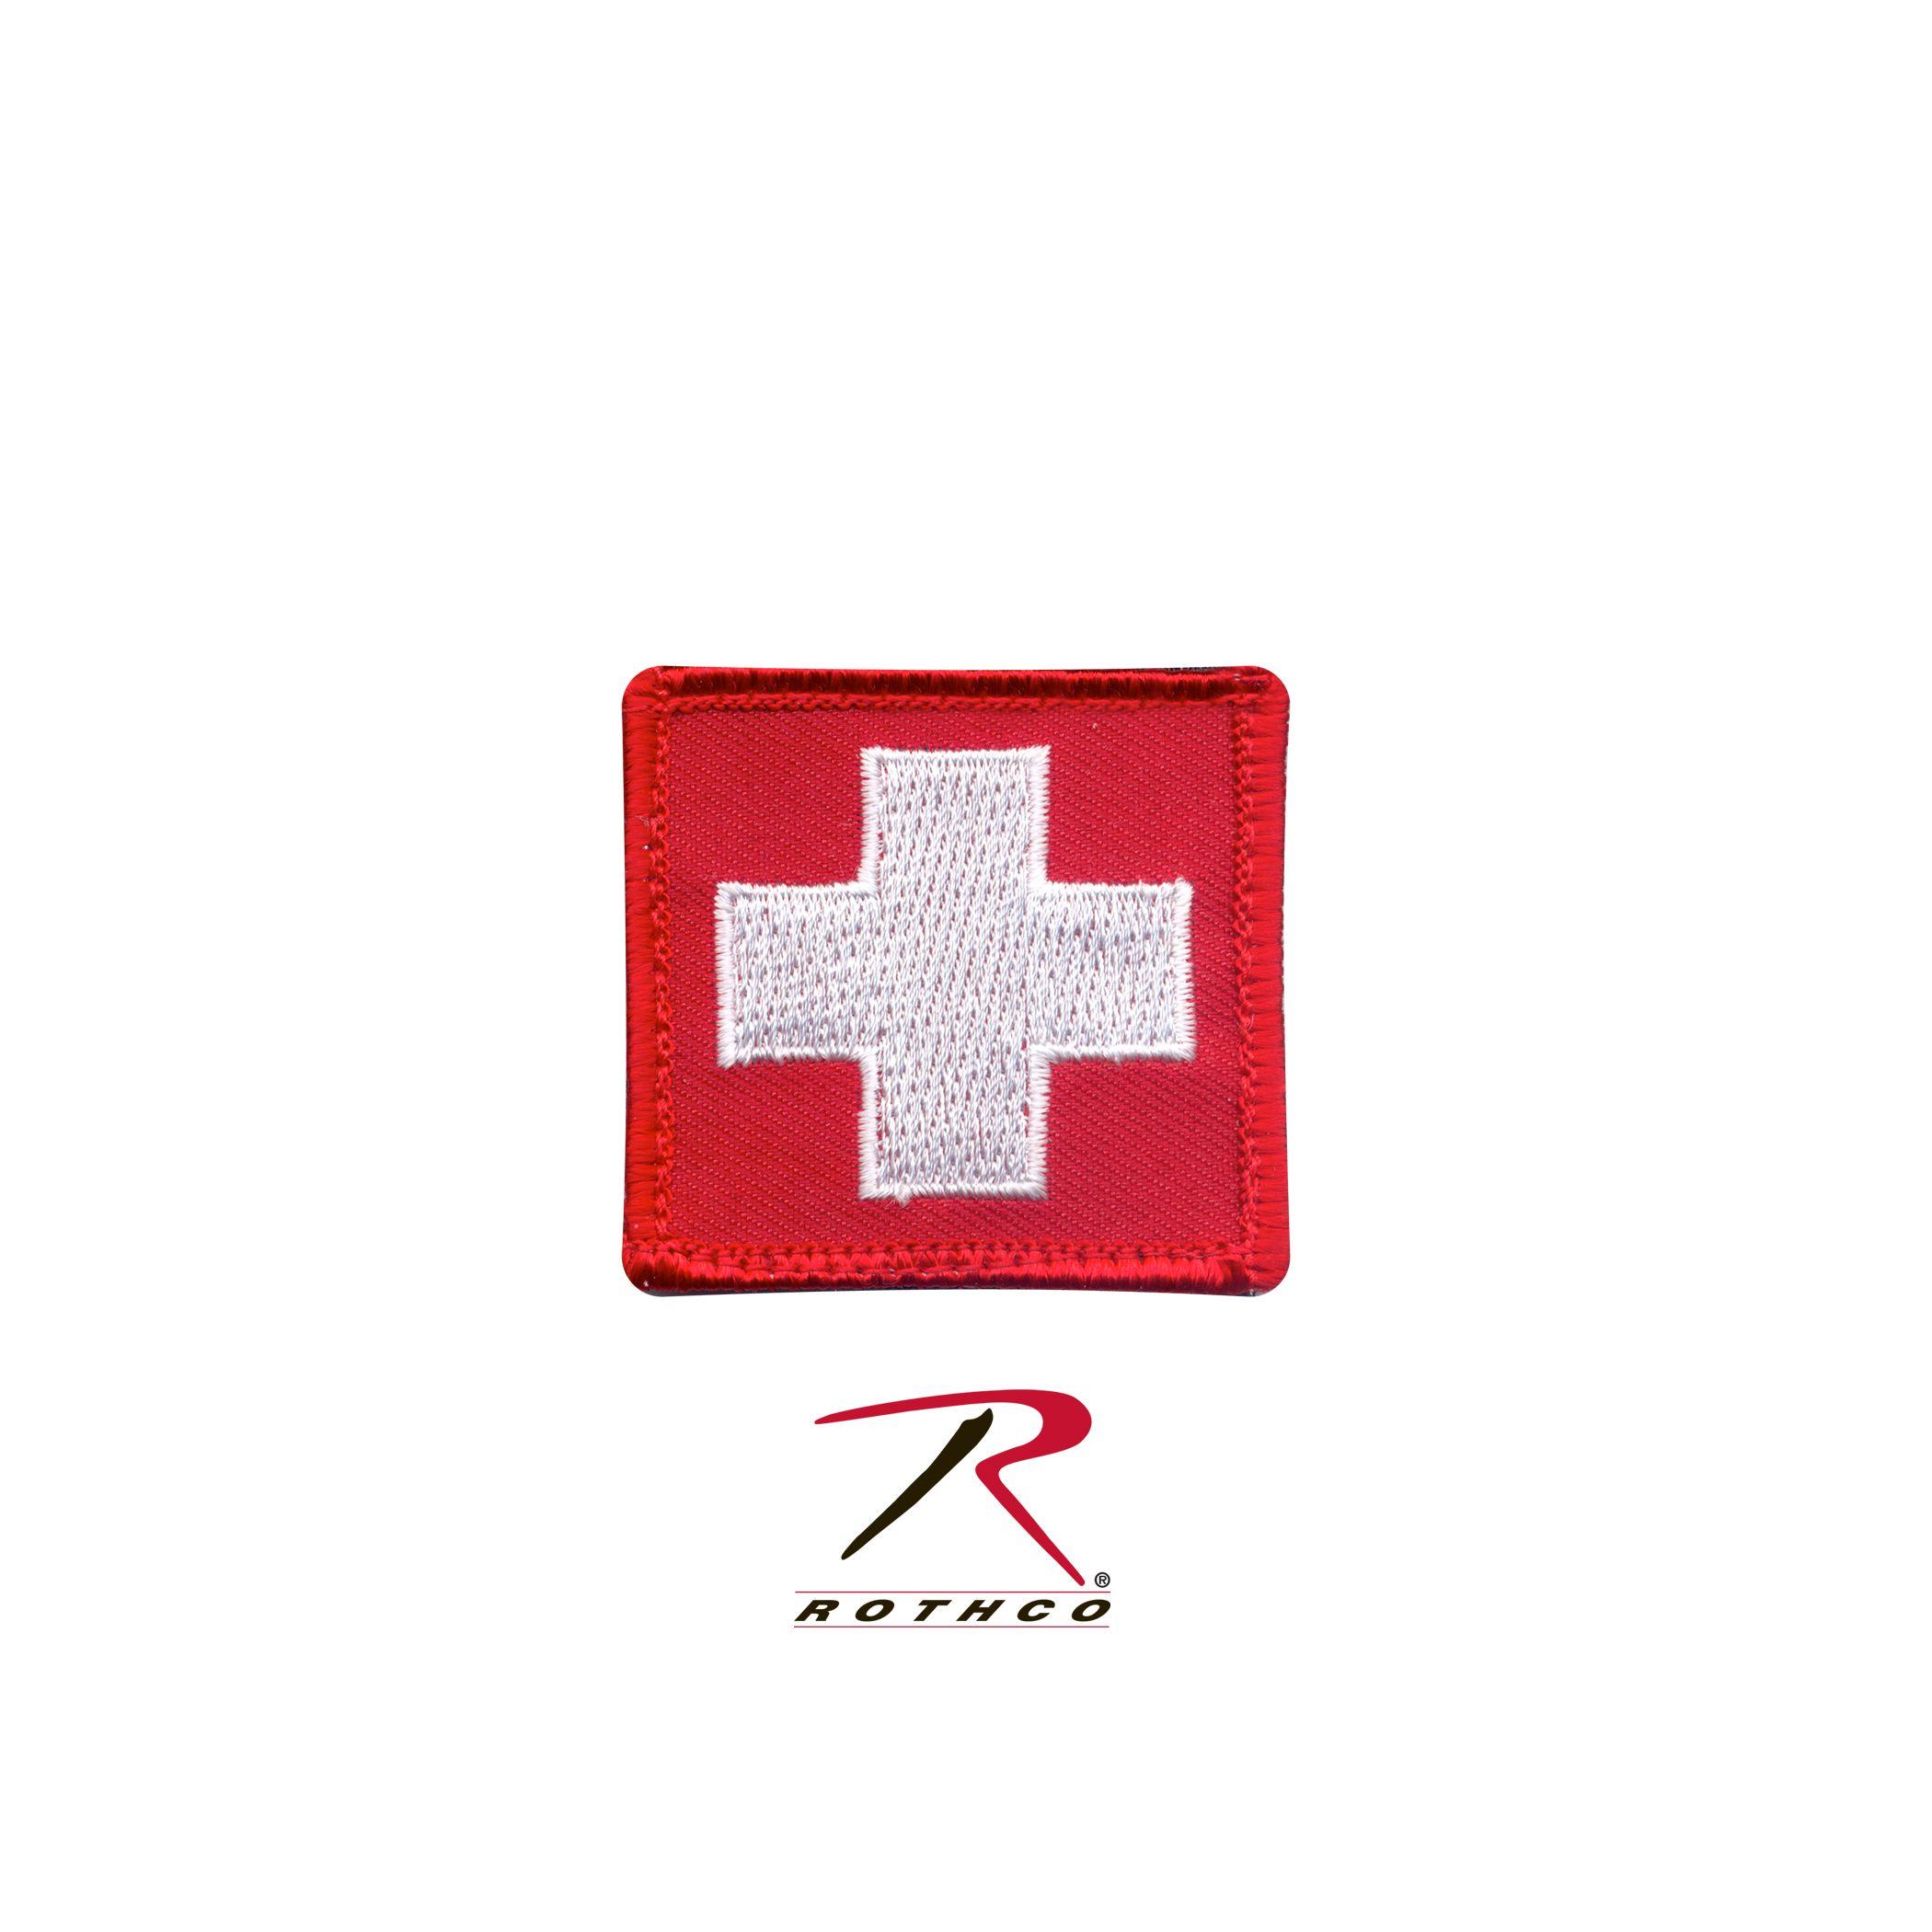 White Box Red Cross Logo - Red square white cross Logos